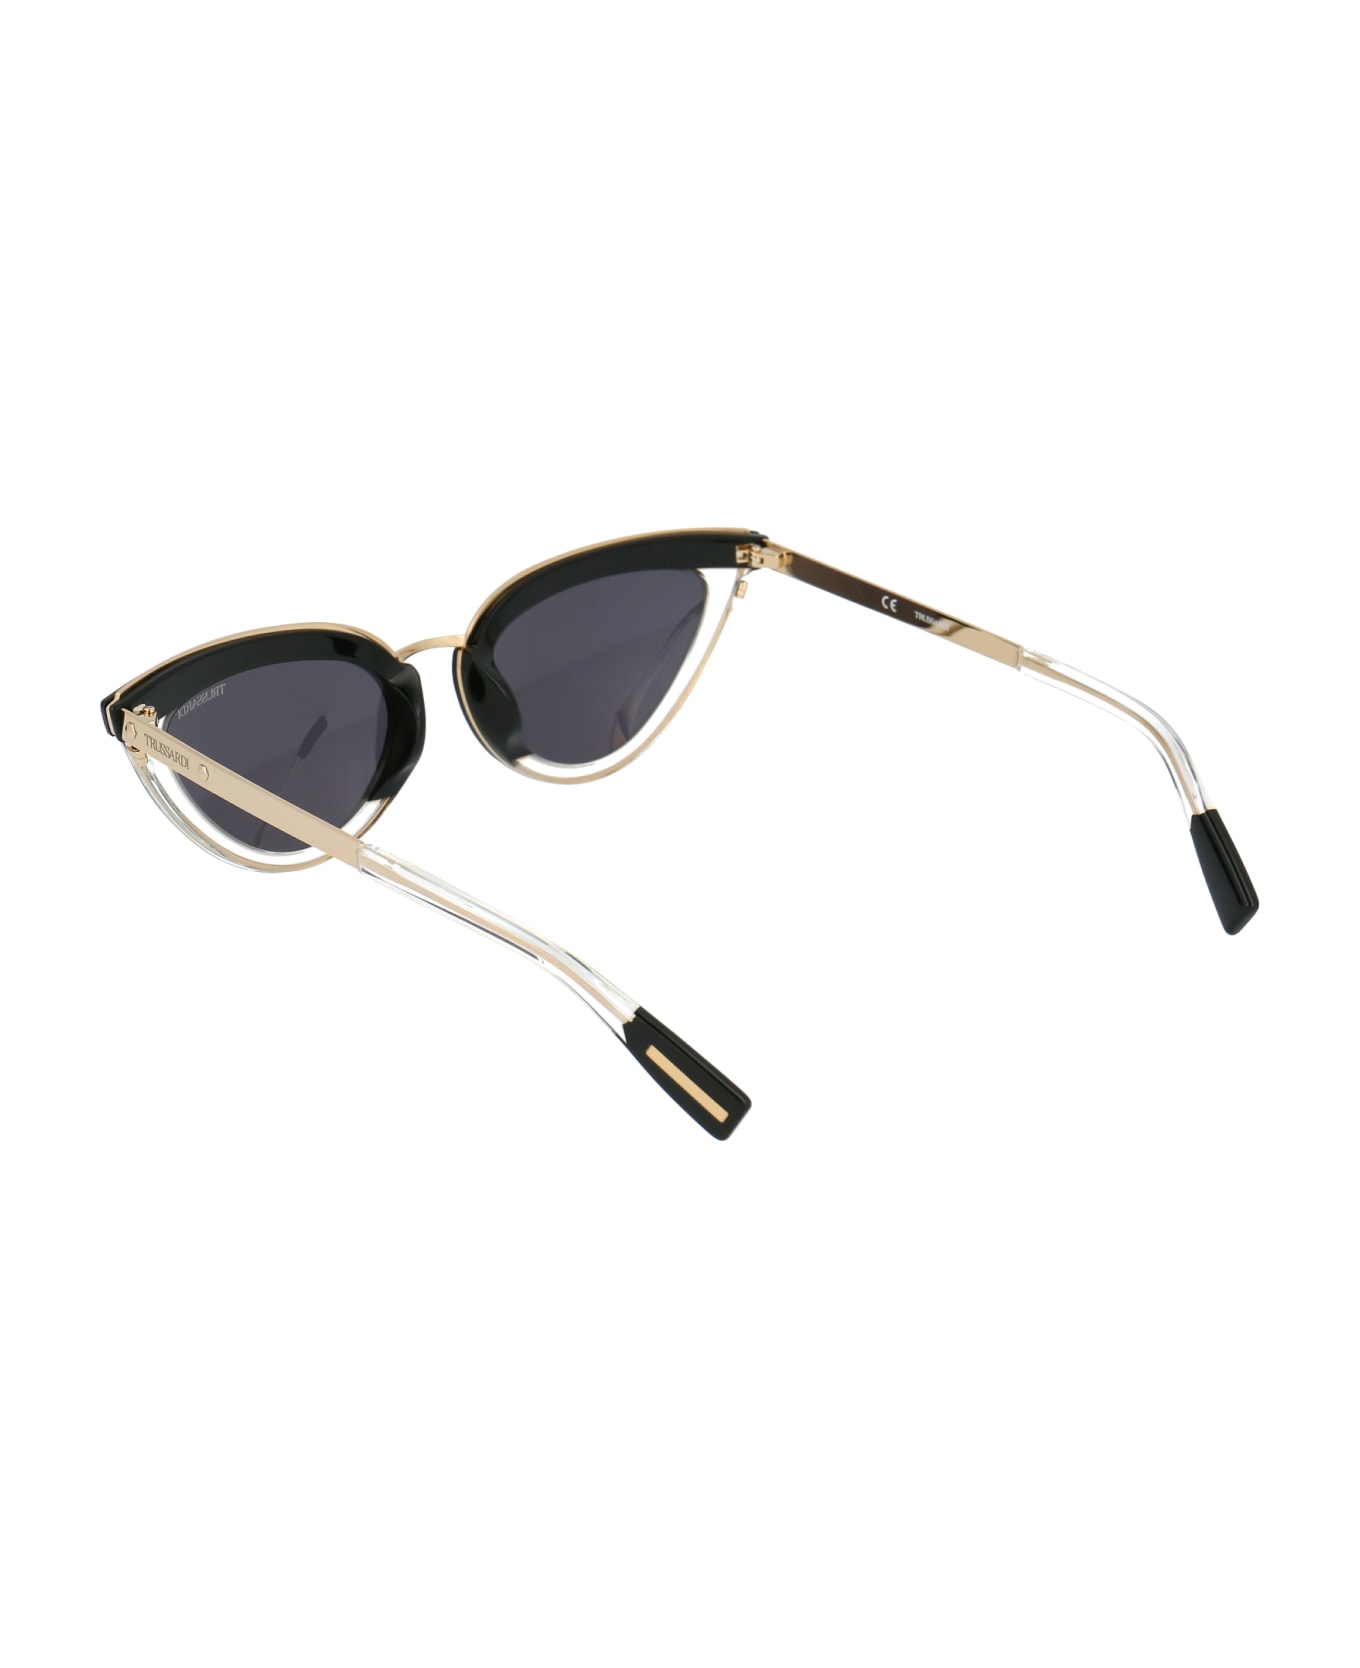 Trussardi Str378 Sunglasses - 0Z50 GOLD